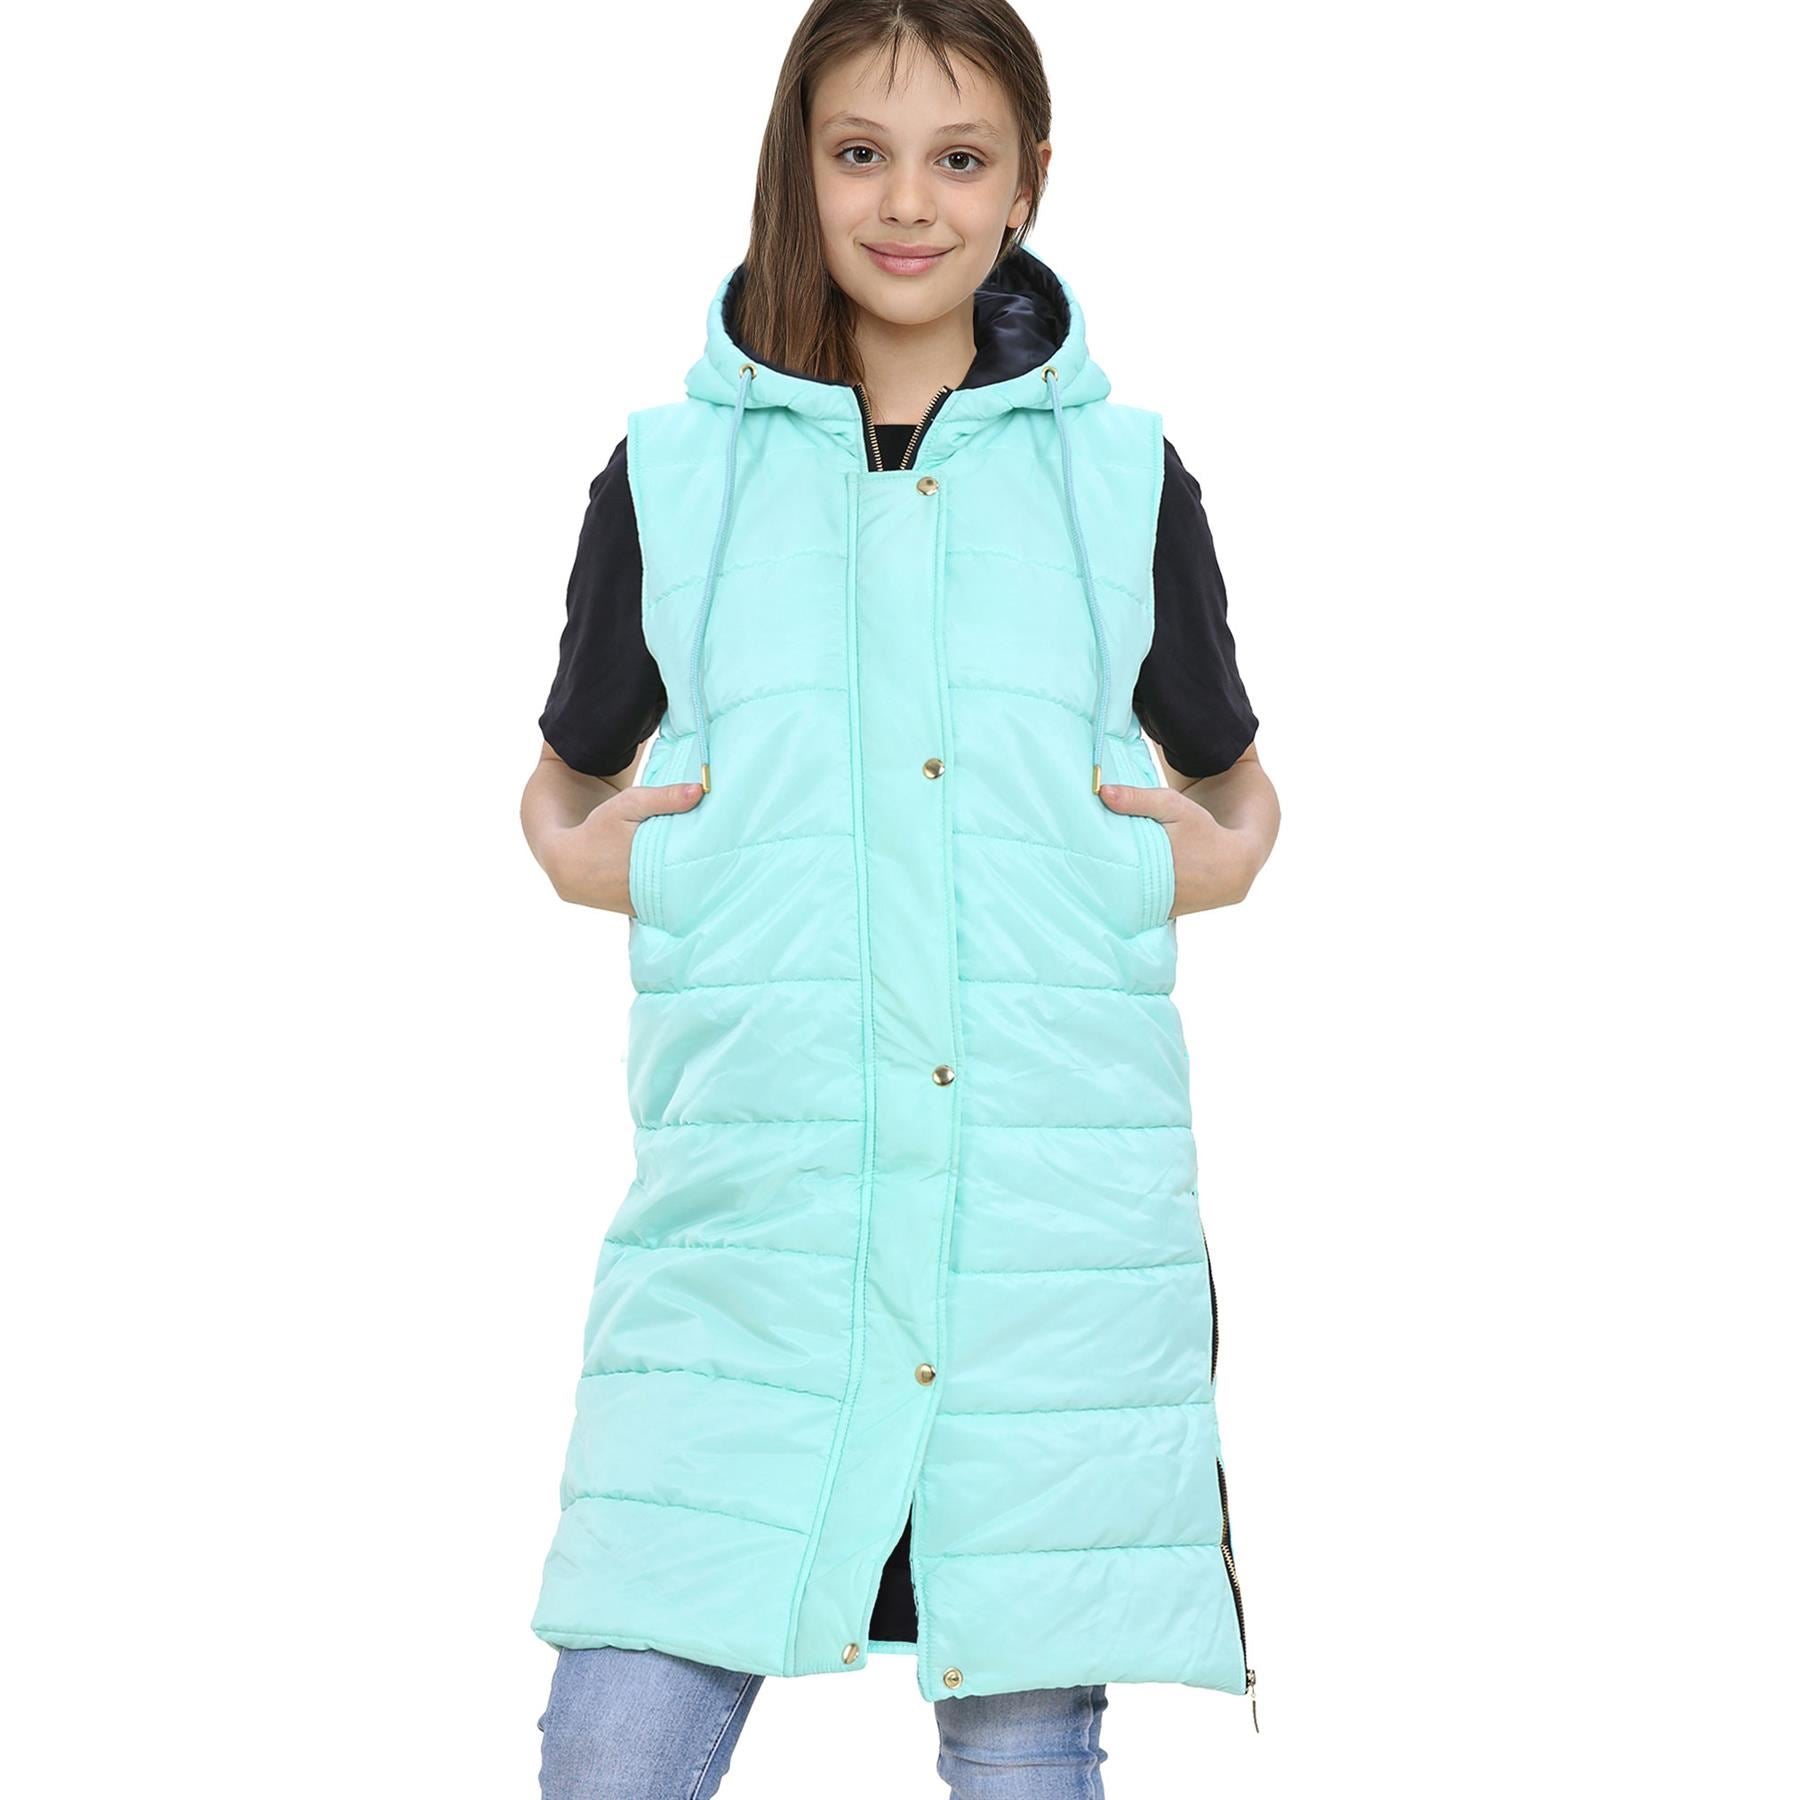 Kids Girls Oversized Mint Gilet Long Line Style Jacket Coat